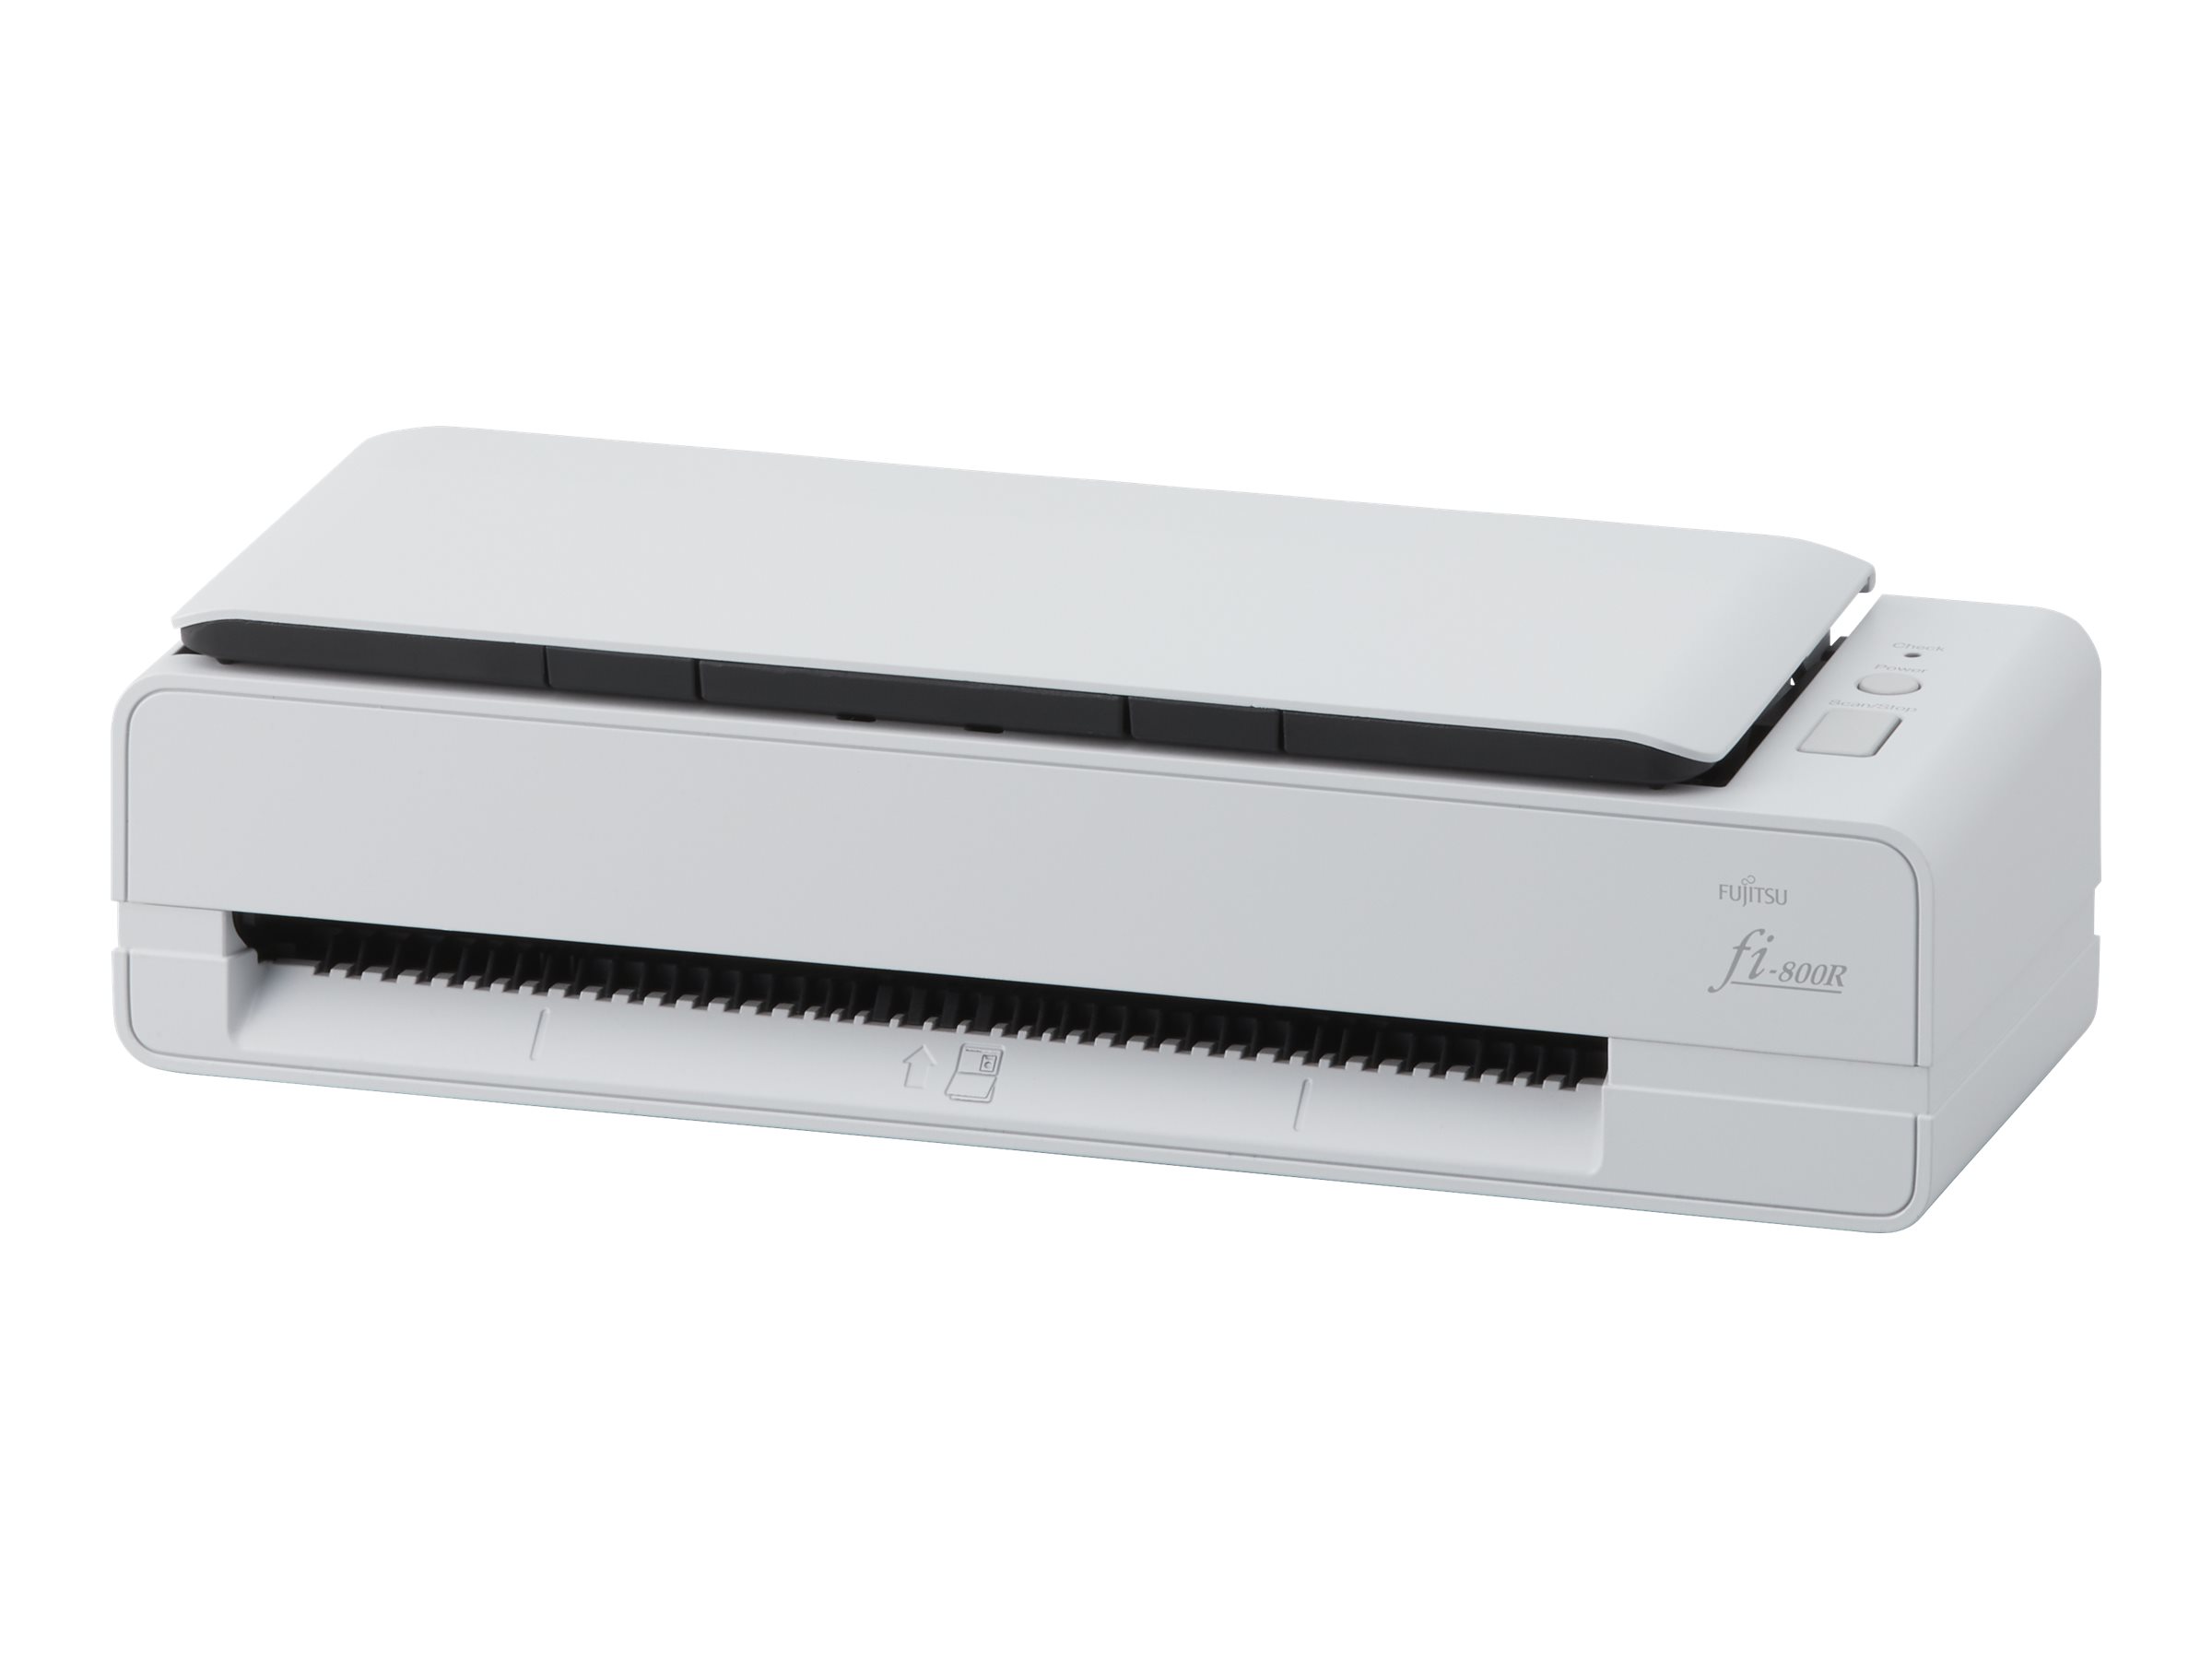 Fujitsu Ricoh fi 800R - Dokumentenscanner - Dual CIS - Duplex - A4 - 600 dpi x 600 dpi - bis zu 40 Seiten/Min. (einfarbig)